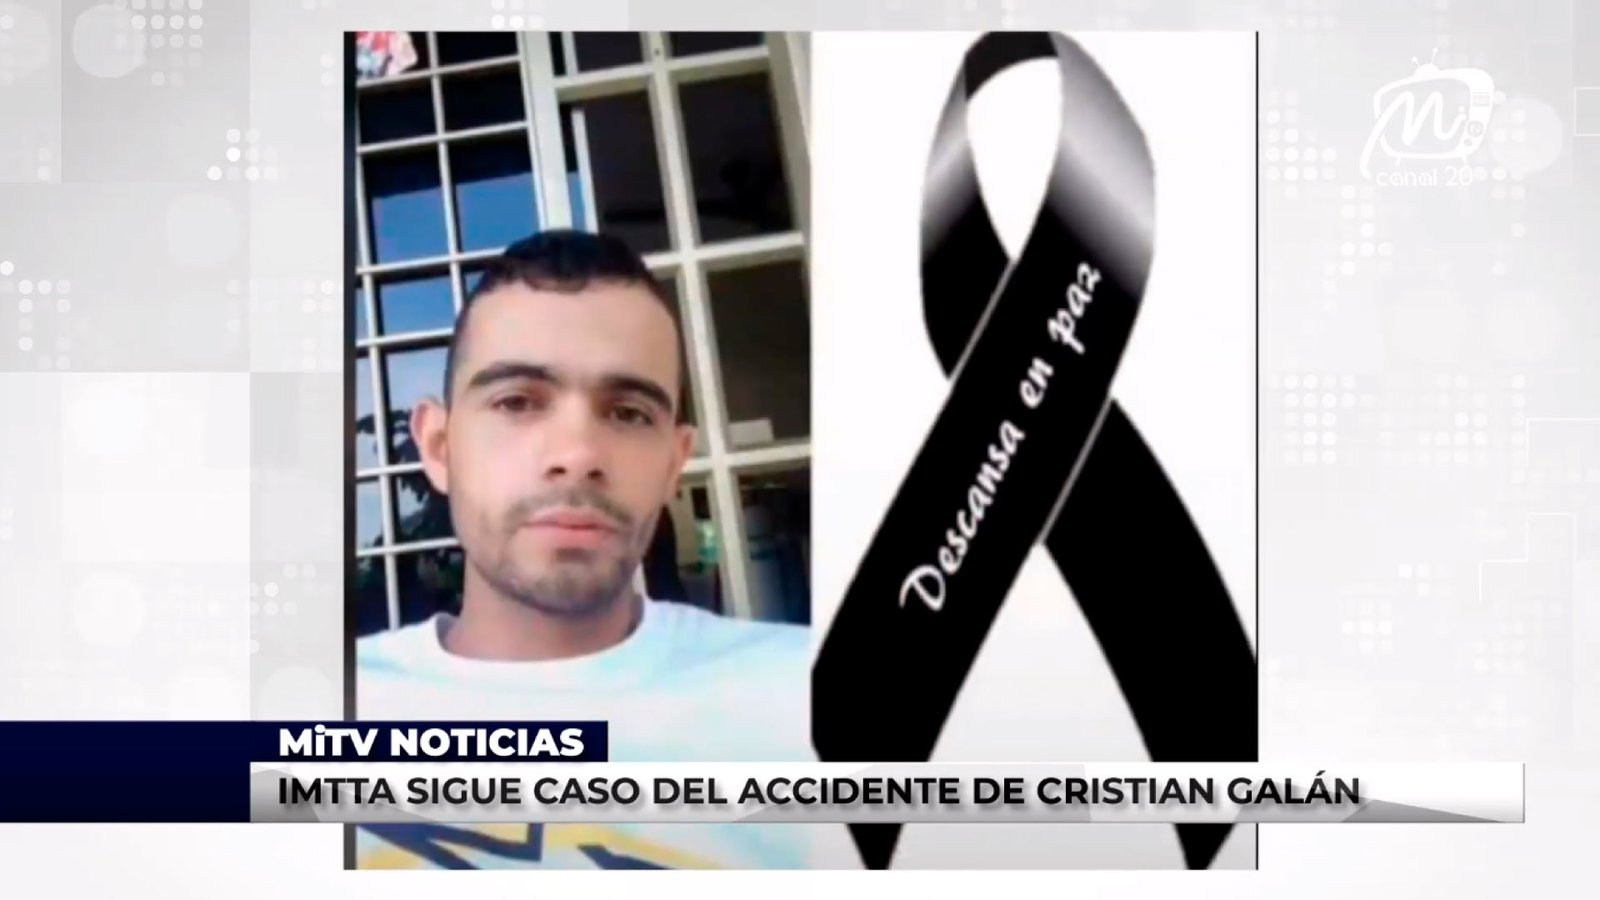 IMTTA SIGUE CASO DEL ACCIDENTE DE CRISTIAN GALÁN